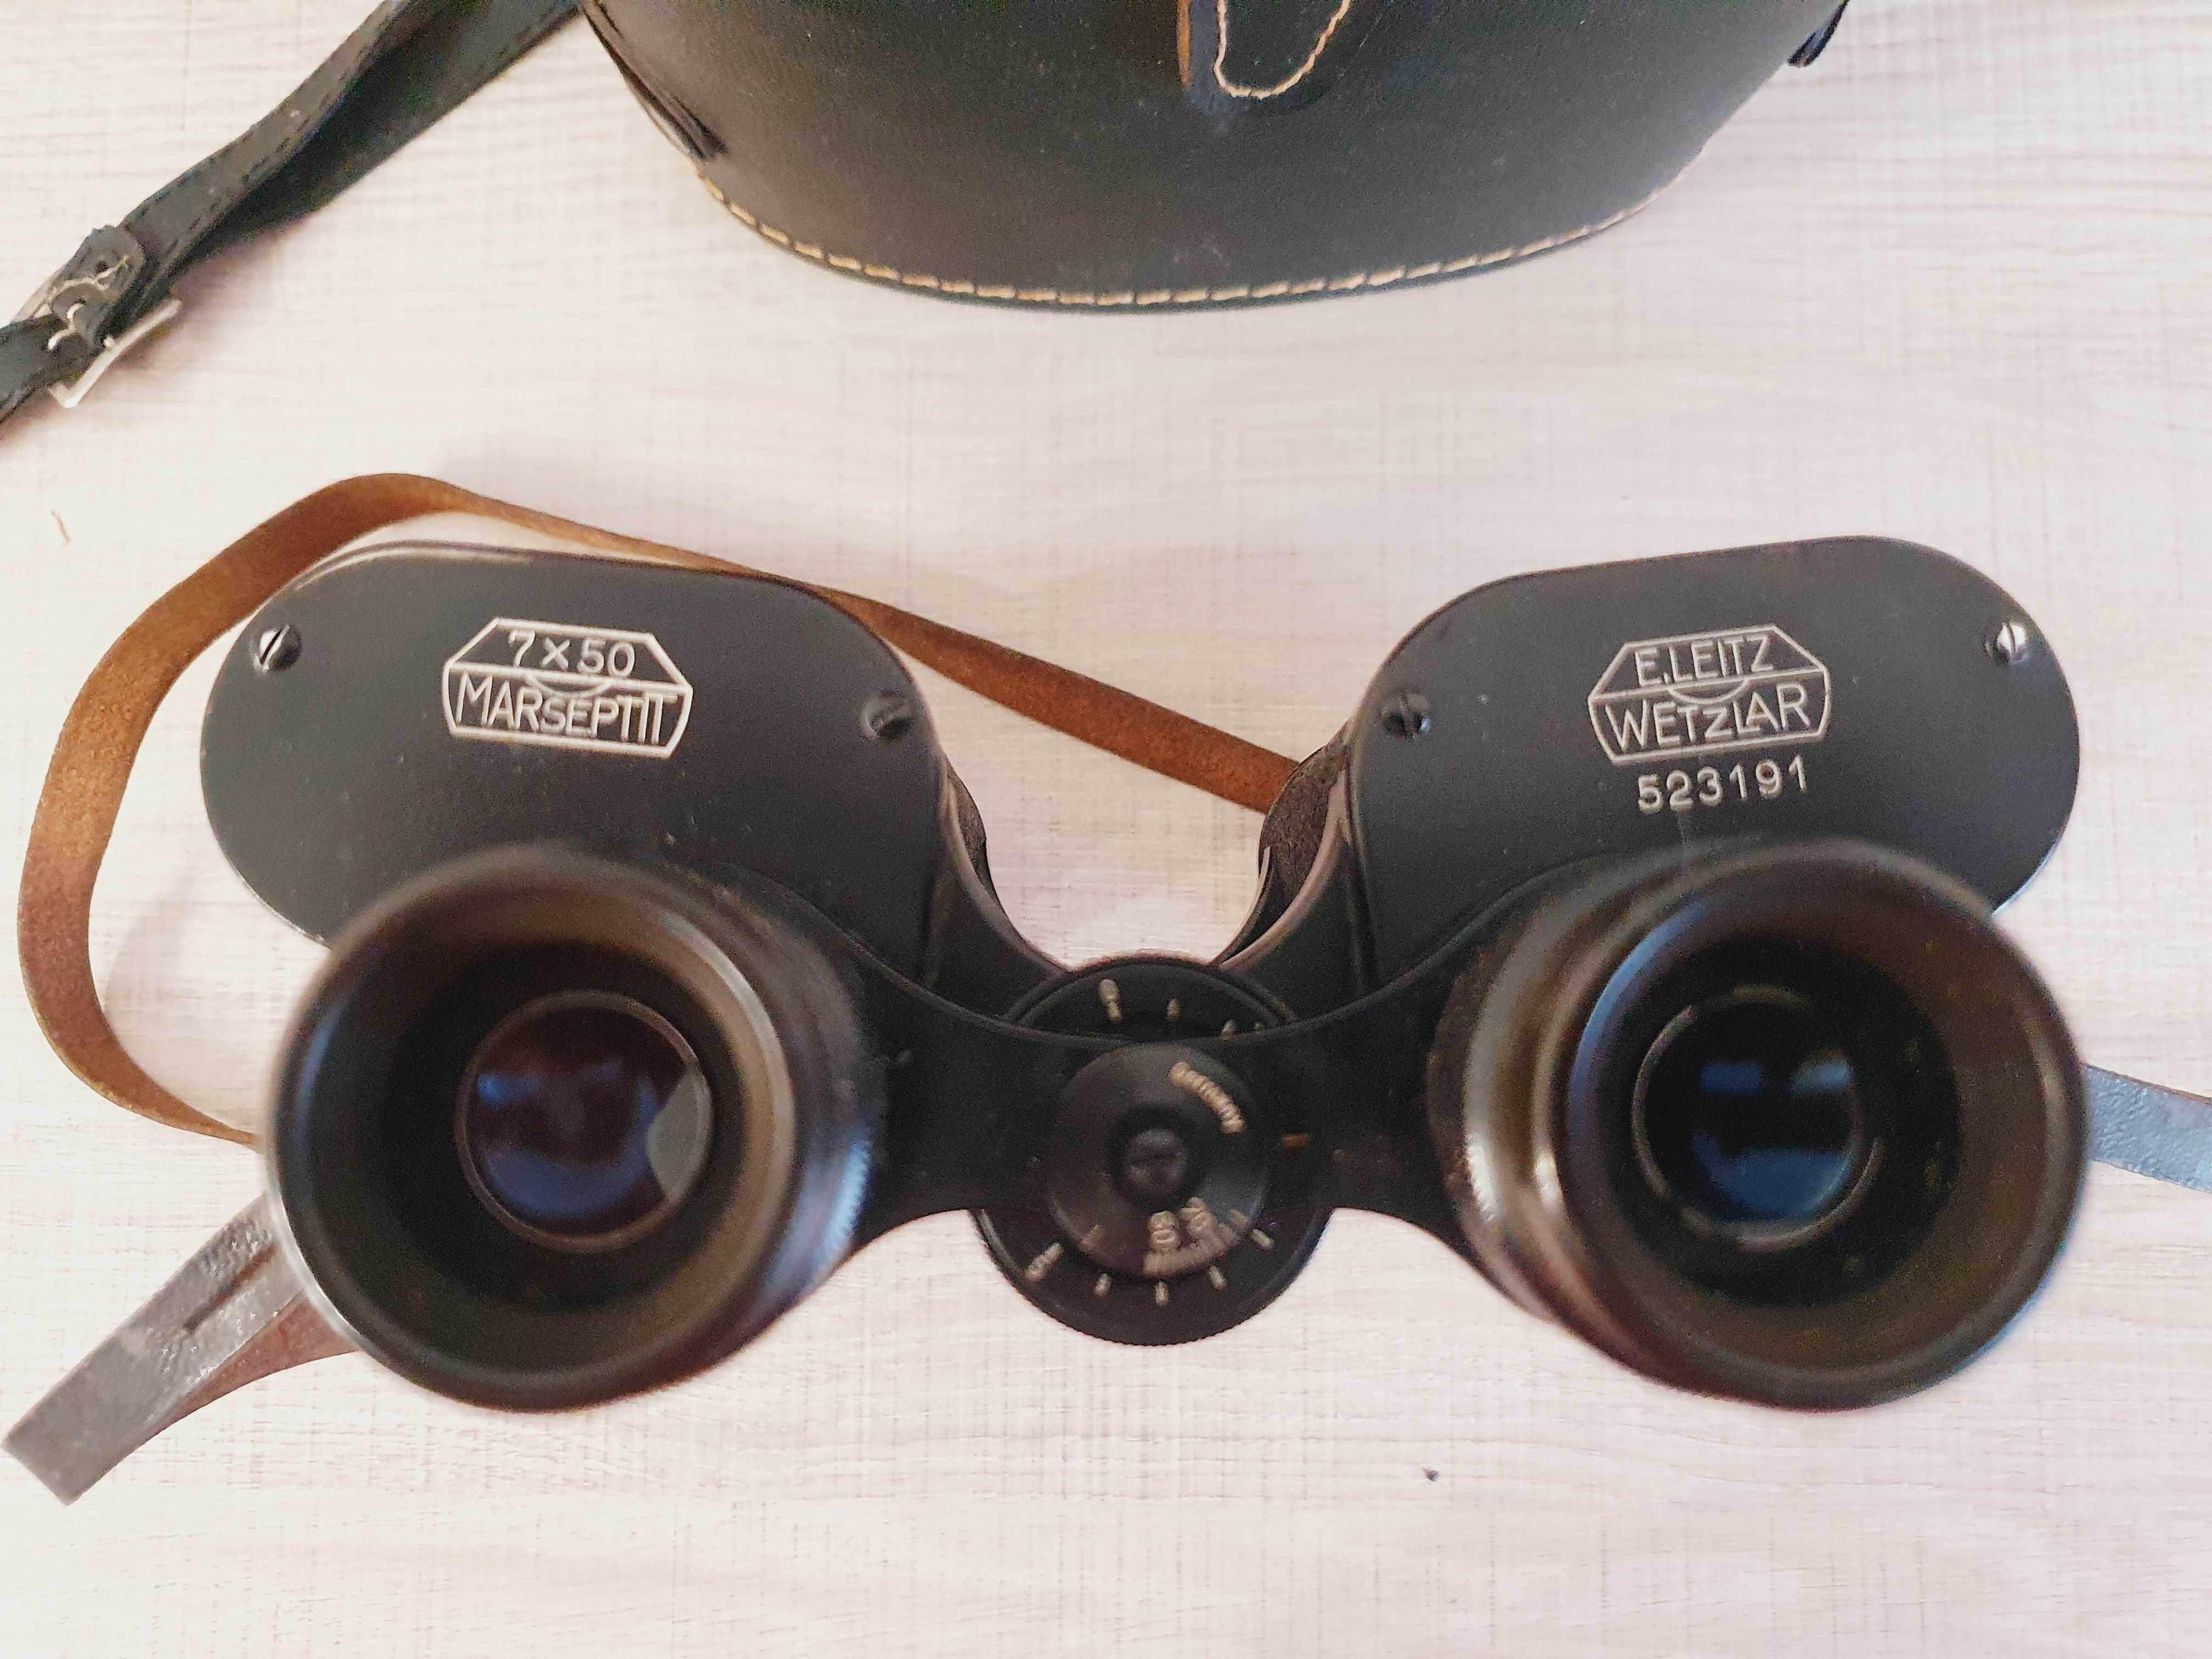 7x50 Marseptit binoculars from E.Leitz, Wetzlar (Leica). 1940 rok